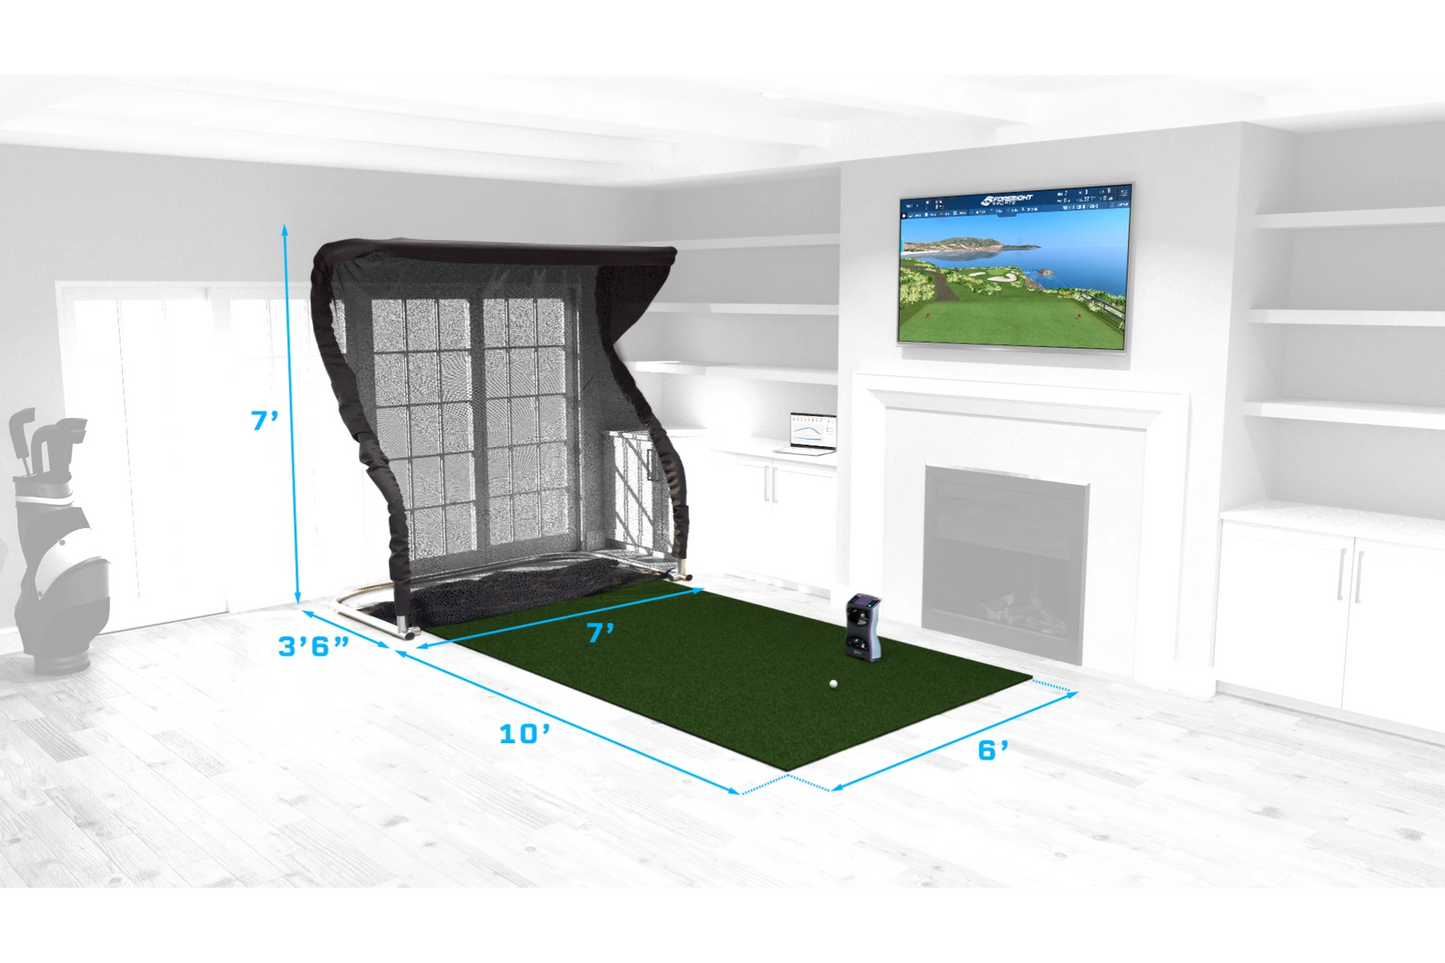 Sim in a Box Par Golf Simulator Package installation Dimensions